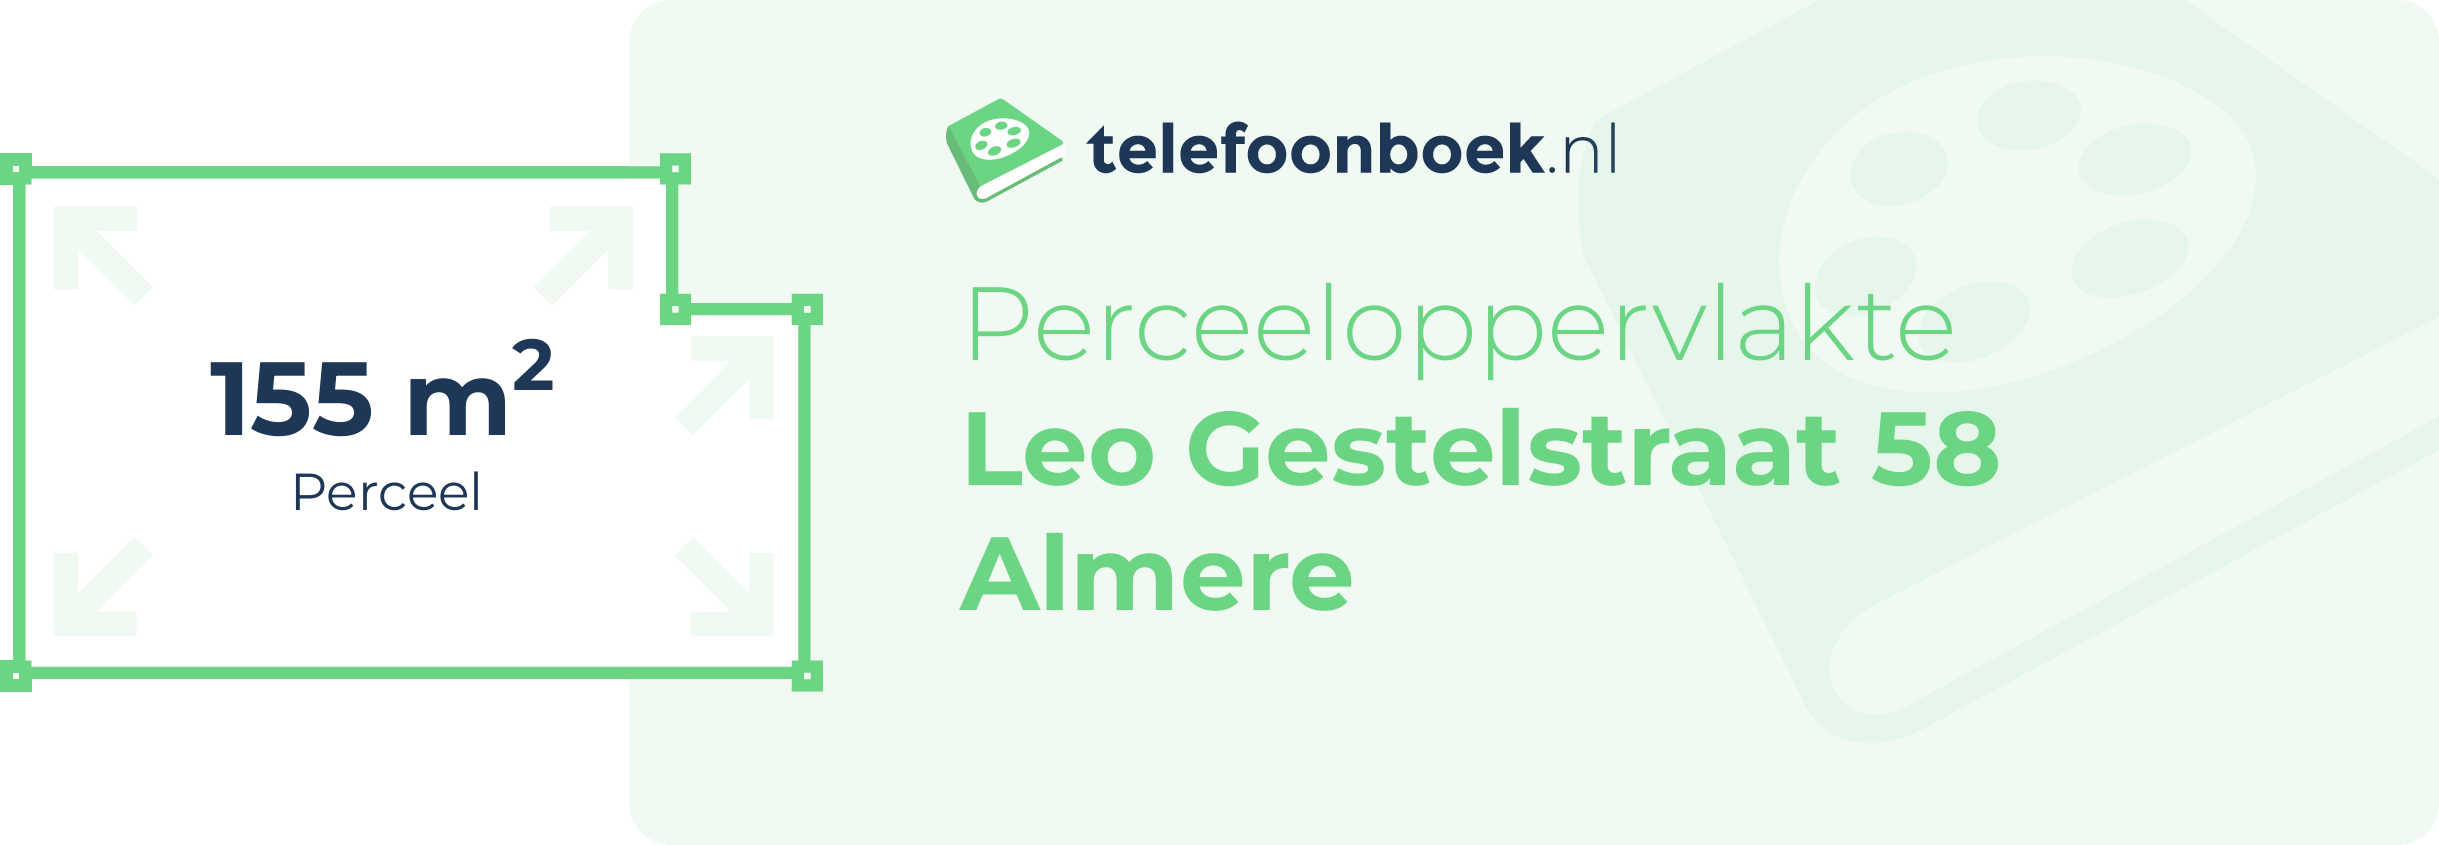 Perceeloppervlakte Leo Gestelstraat 58 Almere